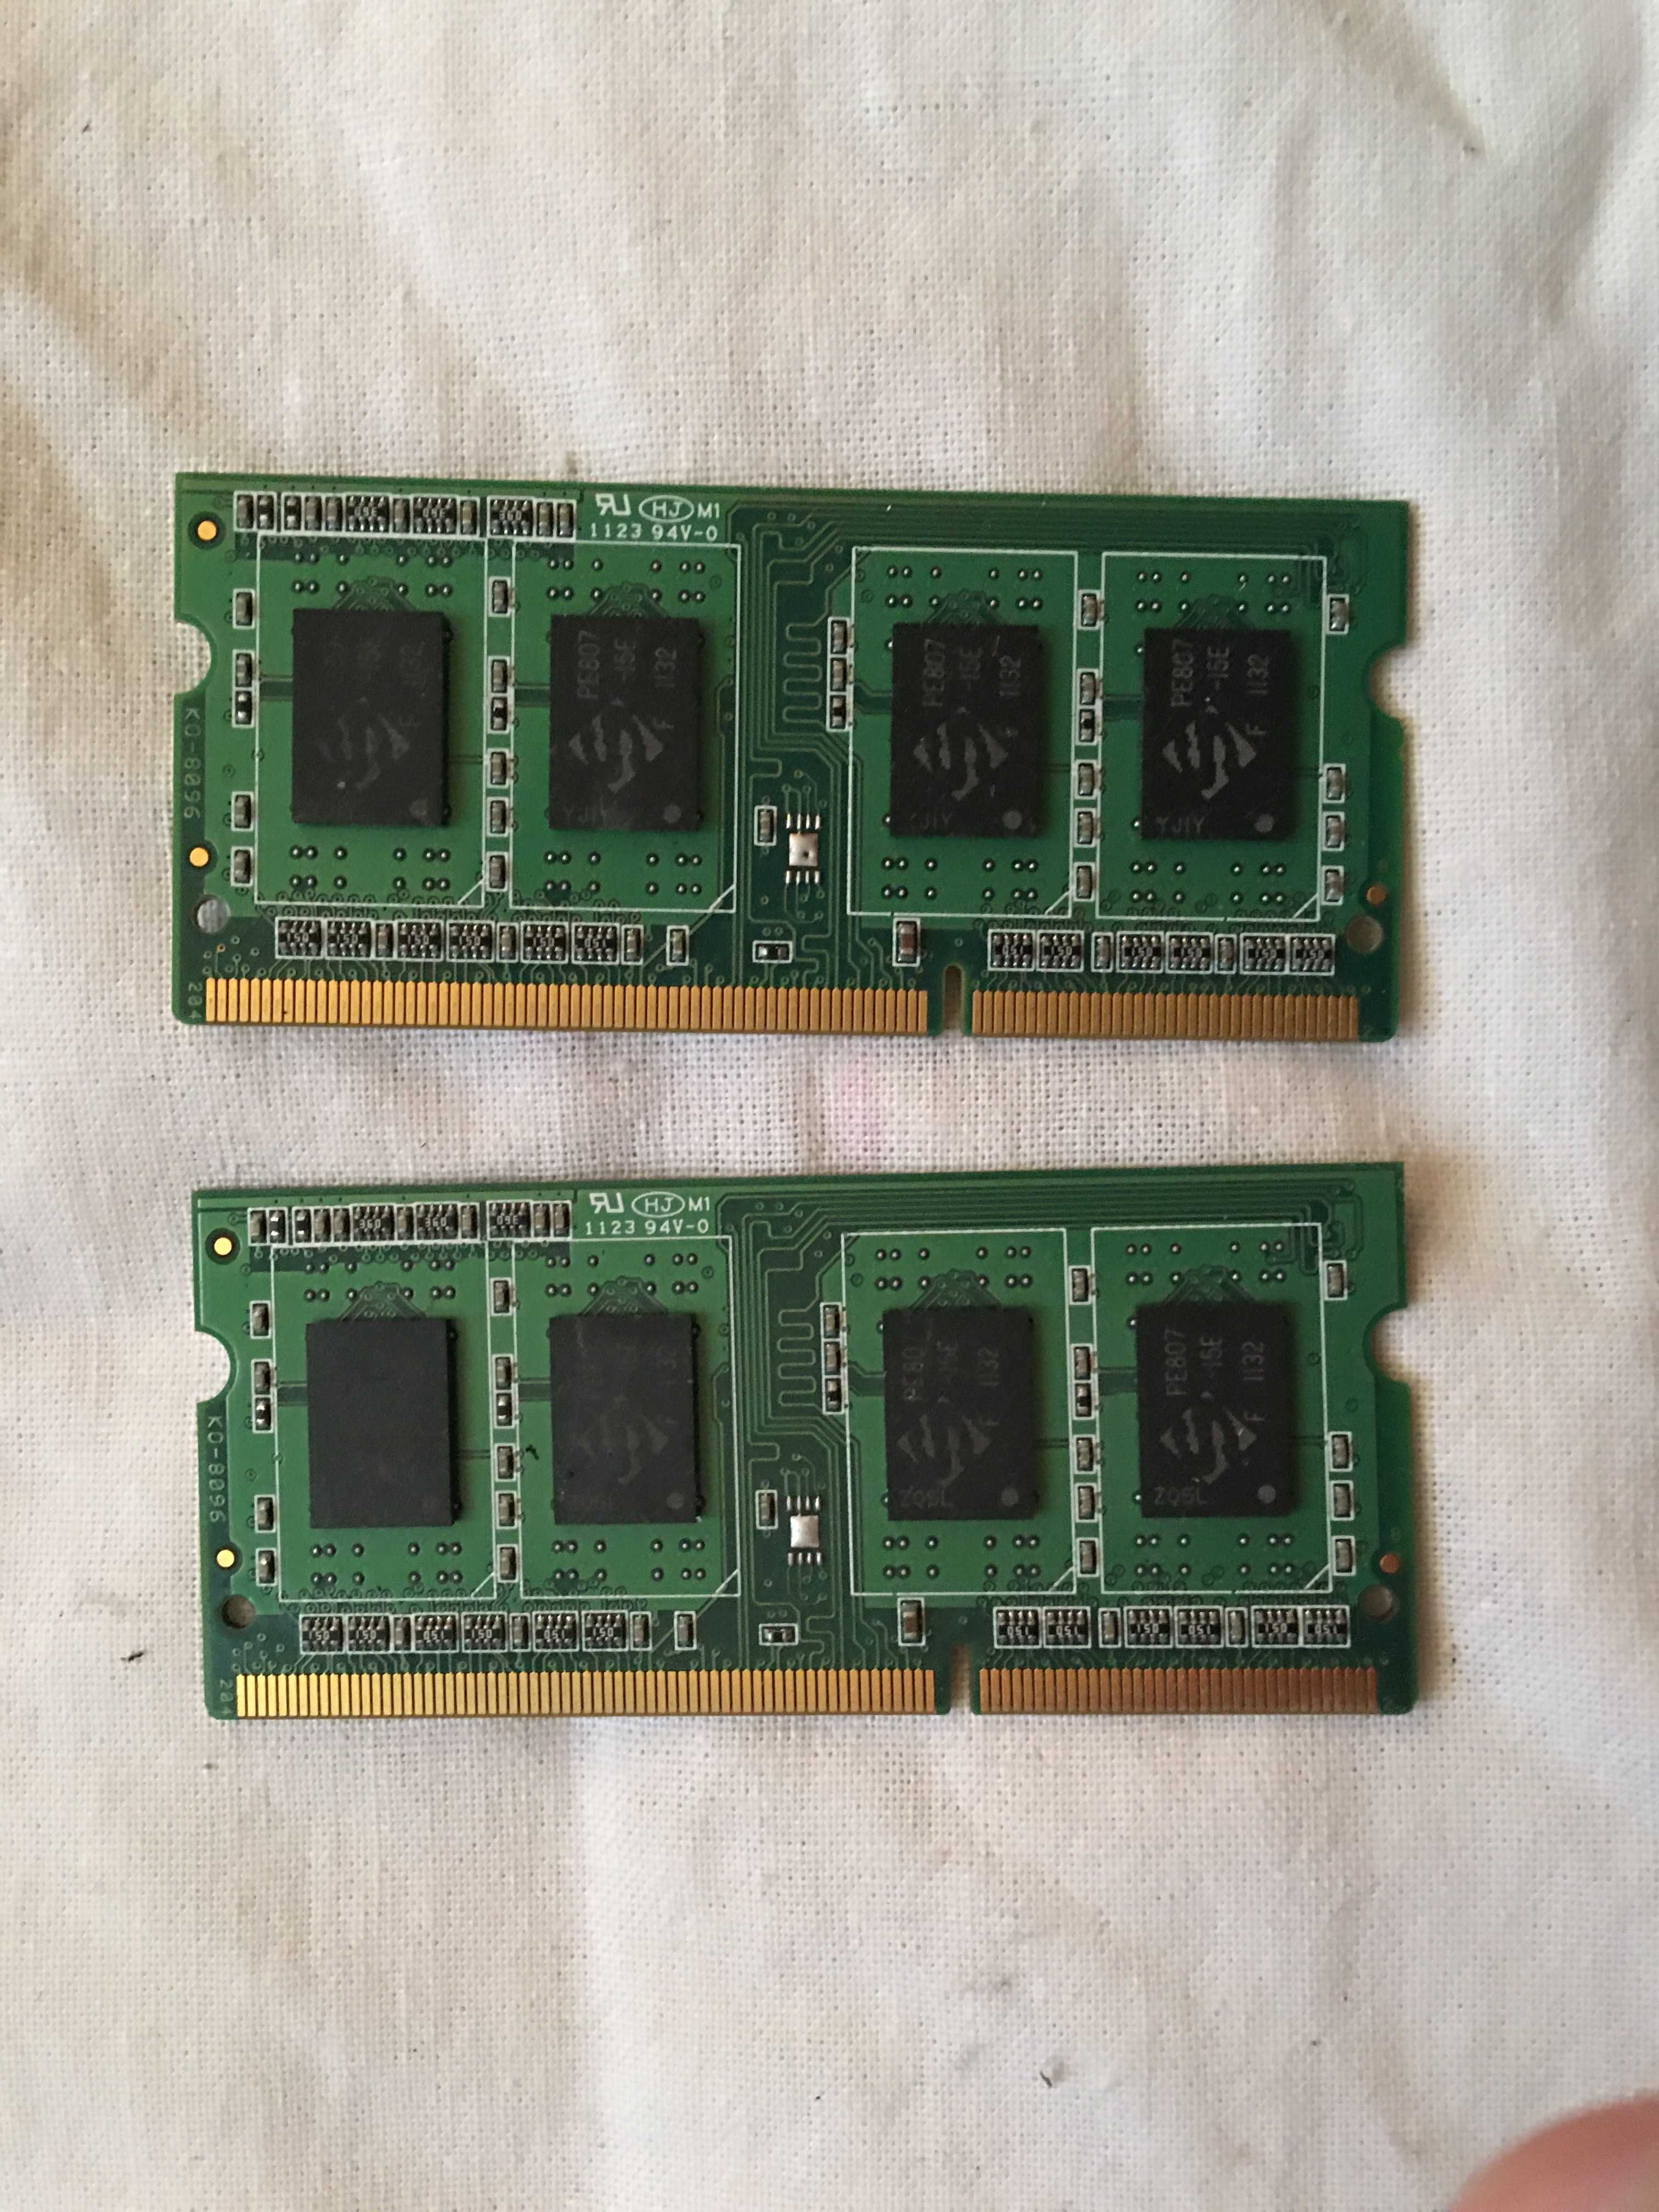 Модуль памяти для ноутбука SoDIMM DDR3 1GB GOODRAM (GR1333S364L9/1G)